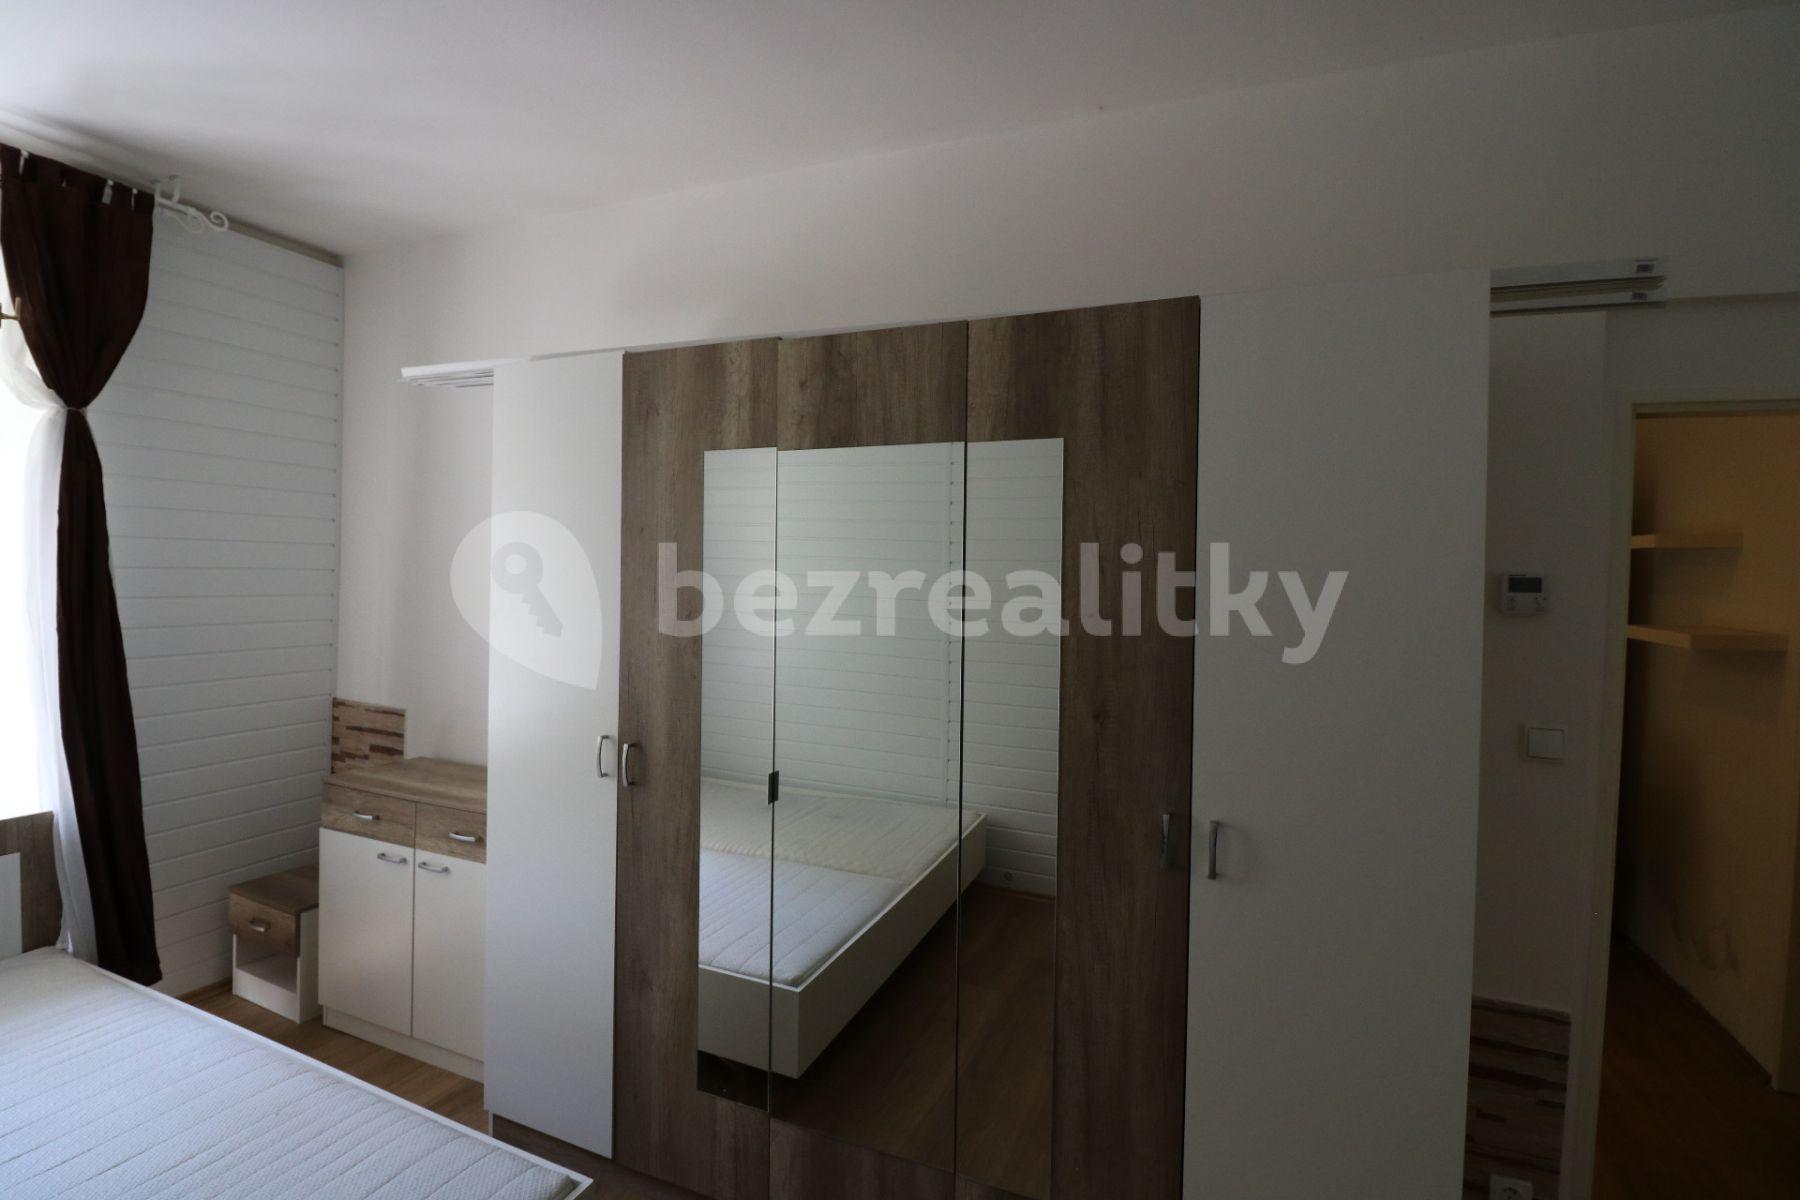 1 bedroom with open-plan kitchen flat for sale, 40 m², Žitomírská, Prague, Prague